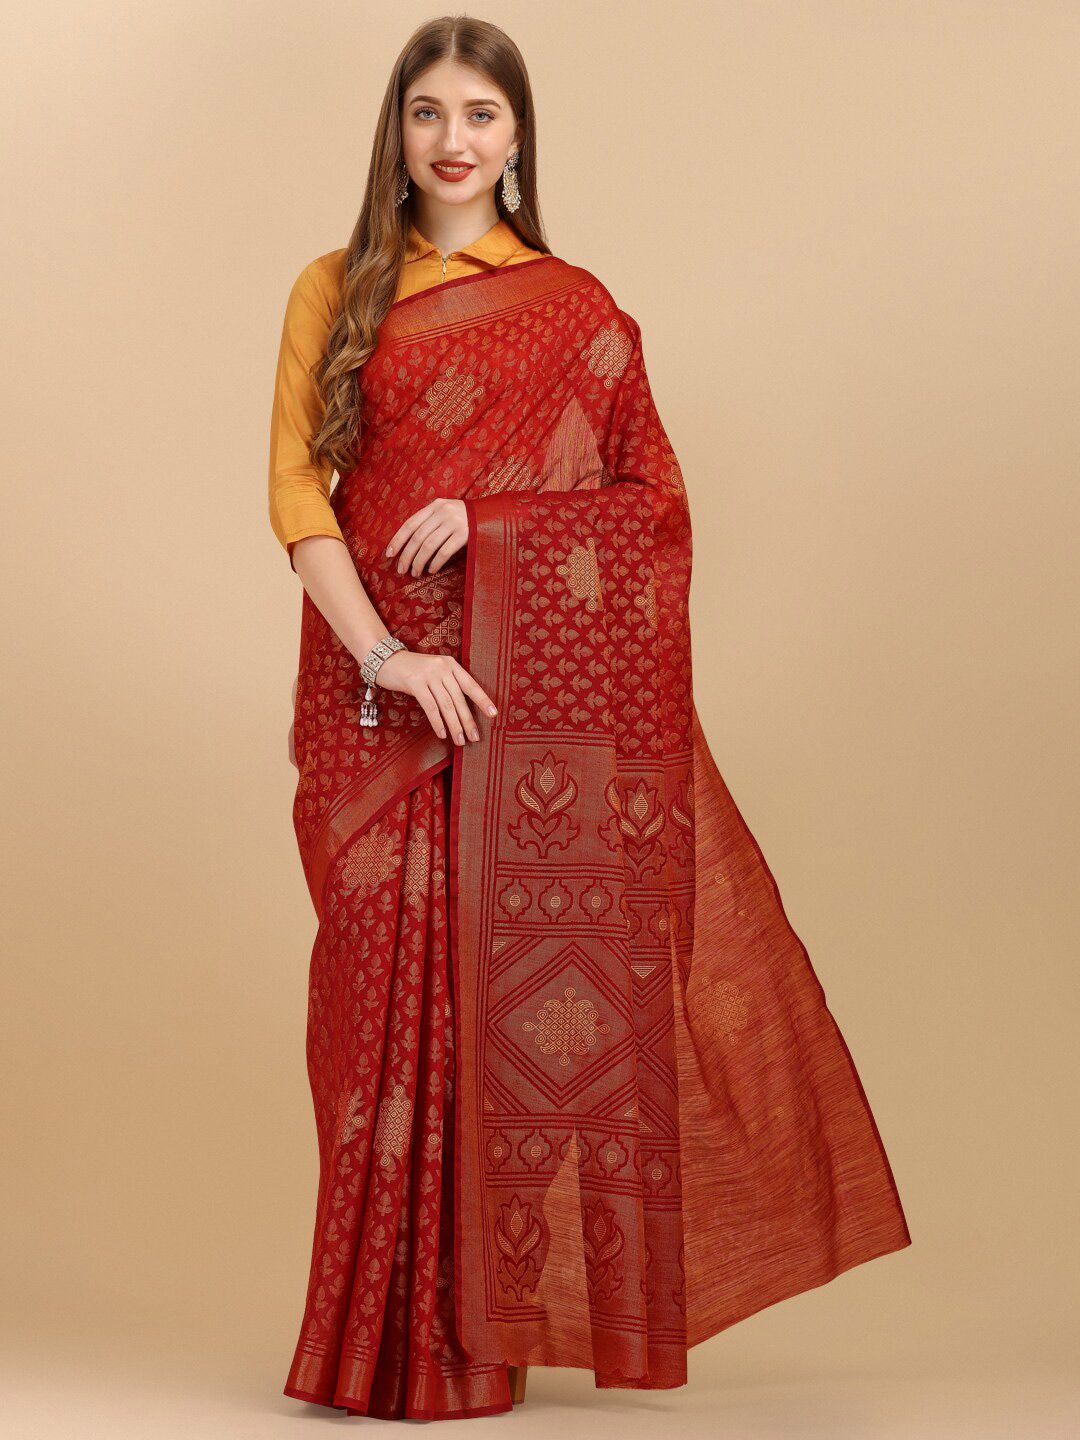 Sangria Red & Gold-Toned Ethnic Motifs Zari Pure Chiffon Saree Price in India